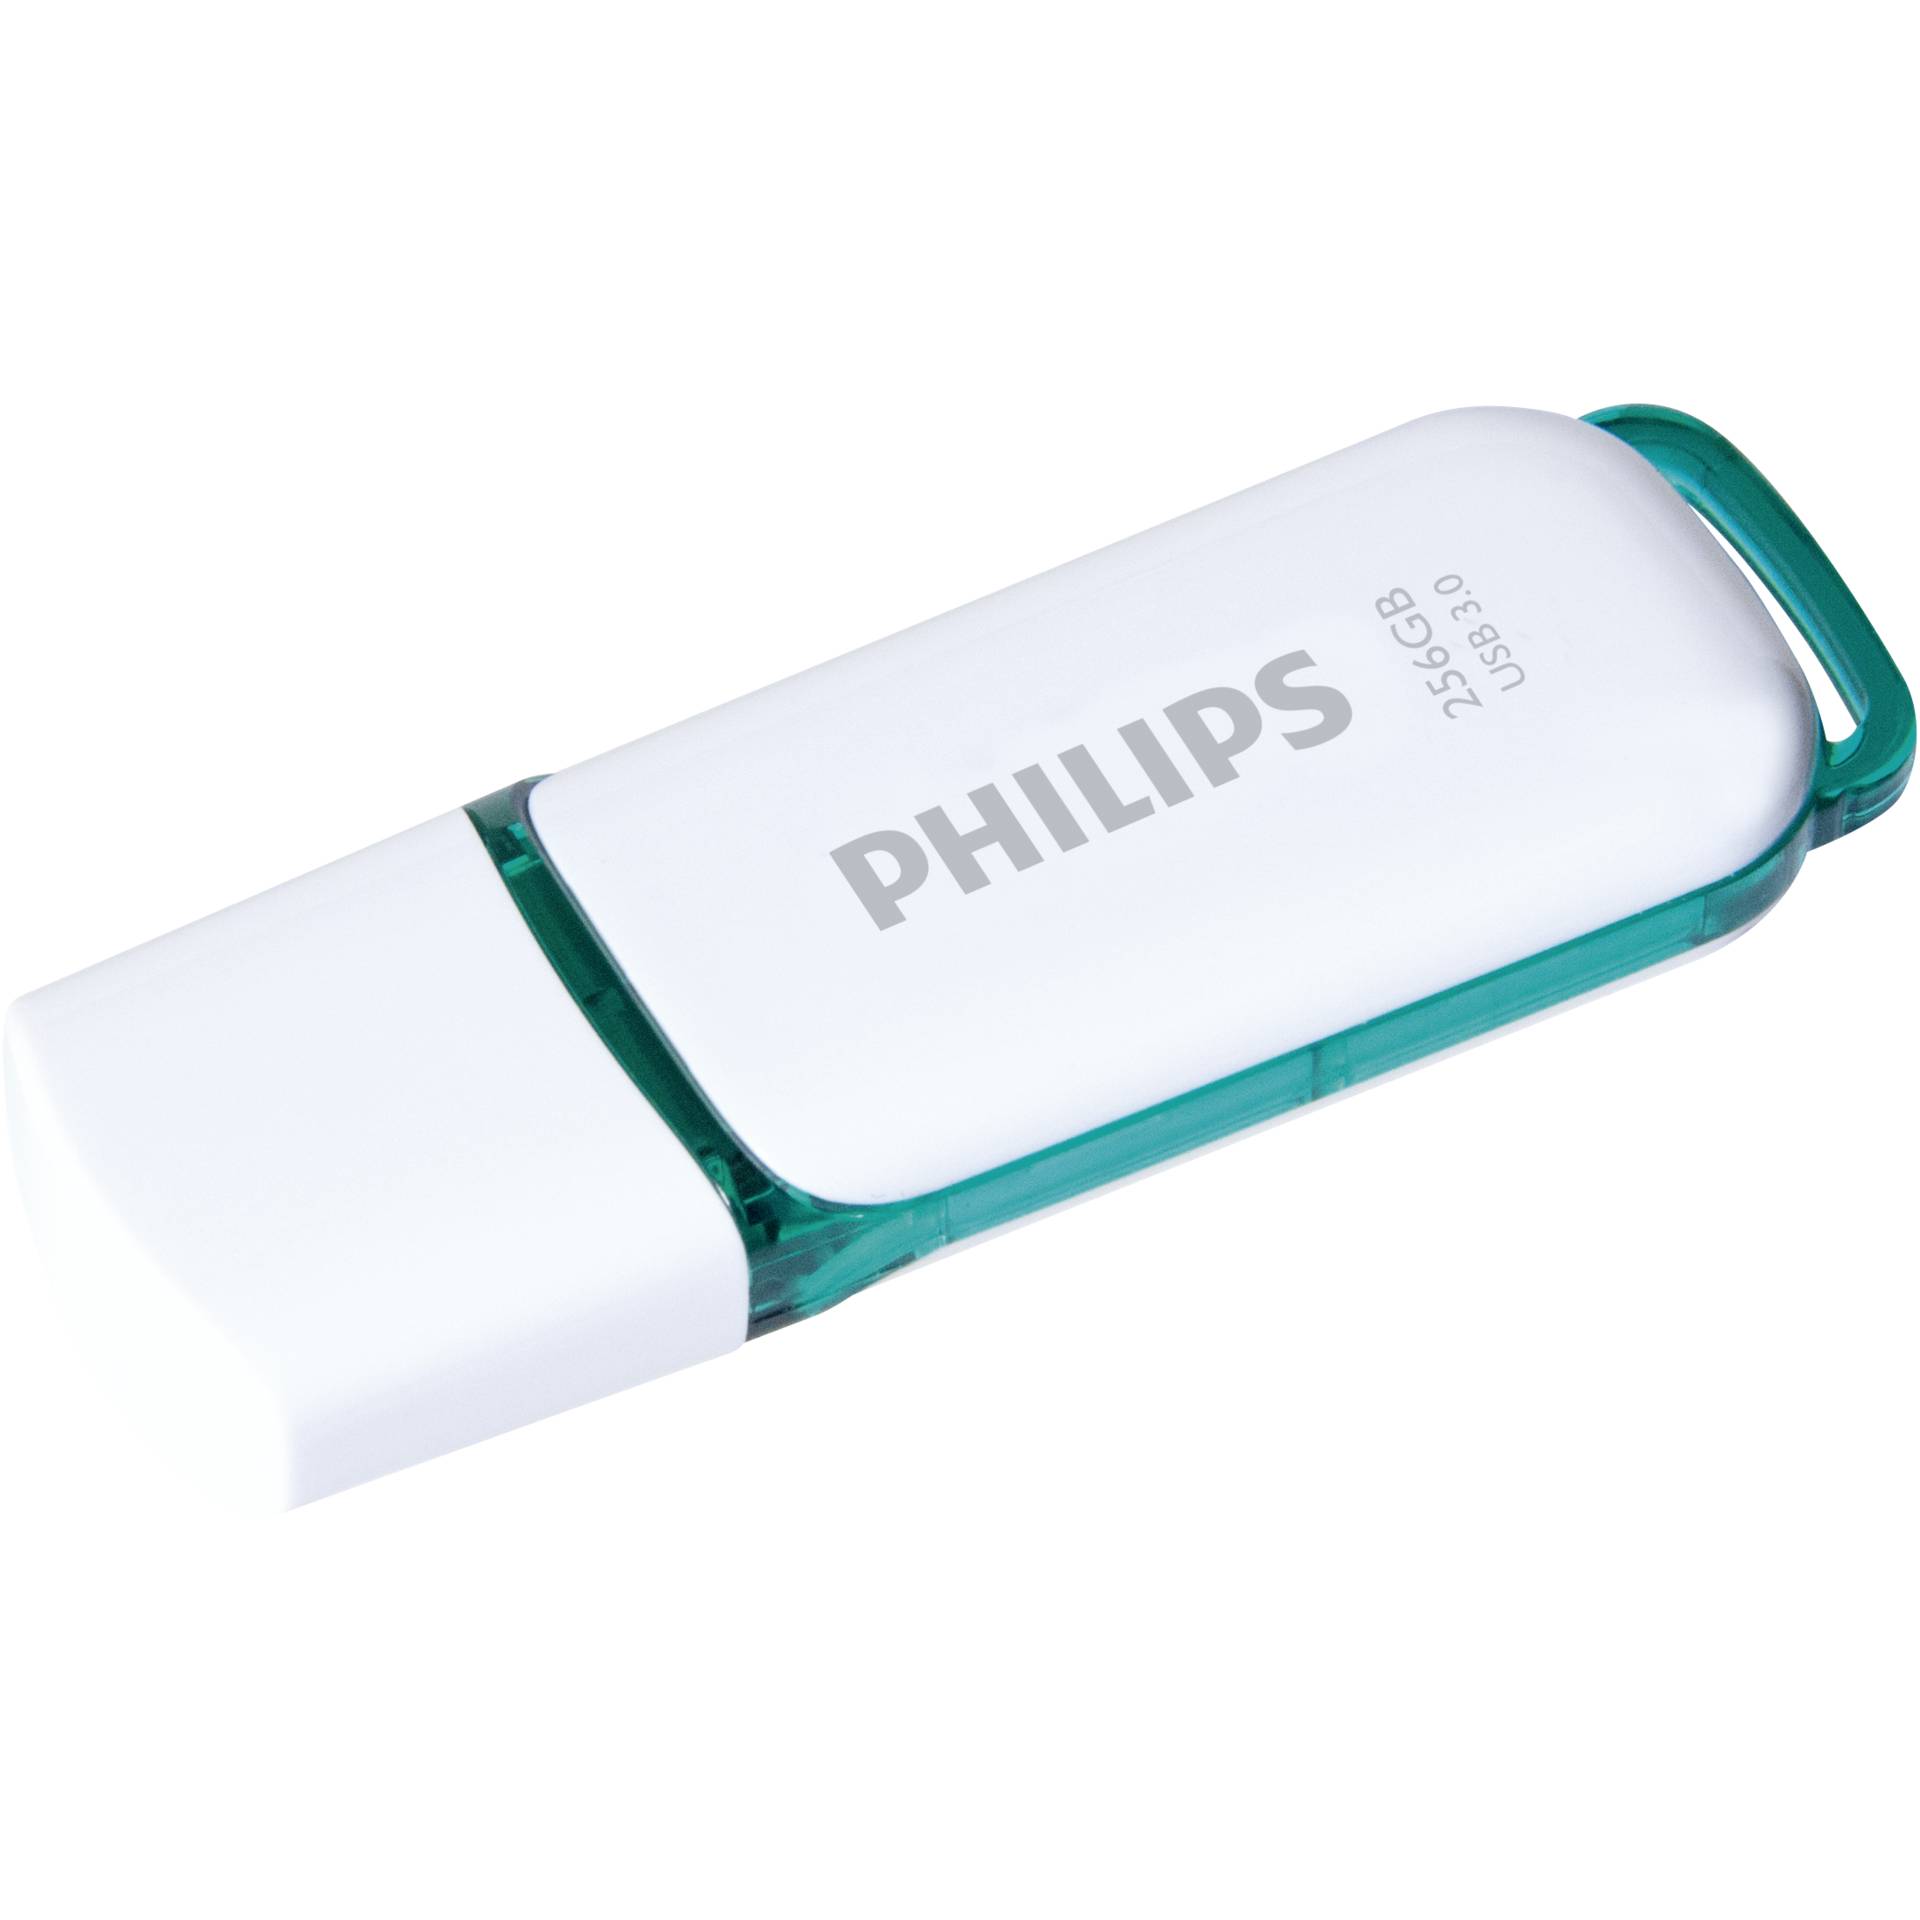 Philips USB 3.0            256GB Snow Edition verde